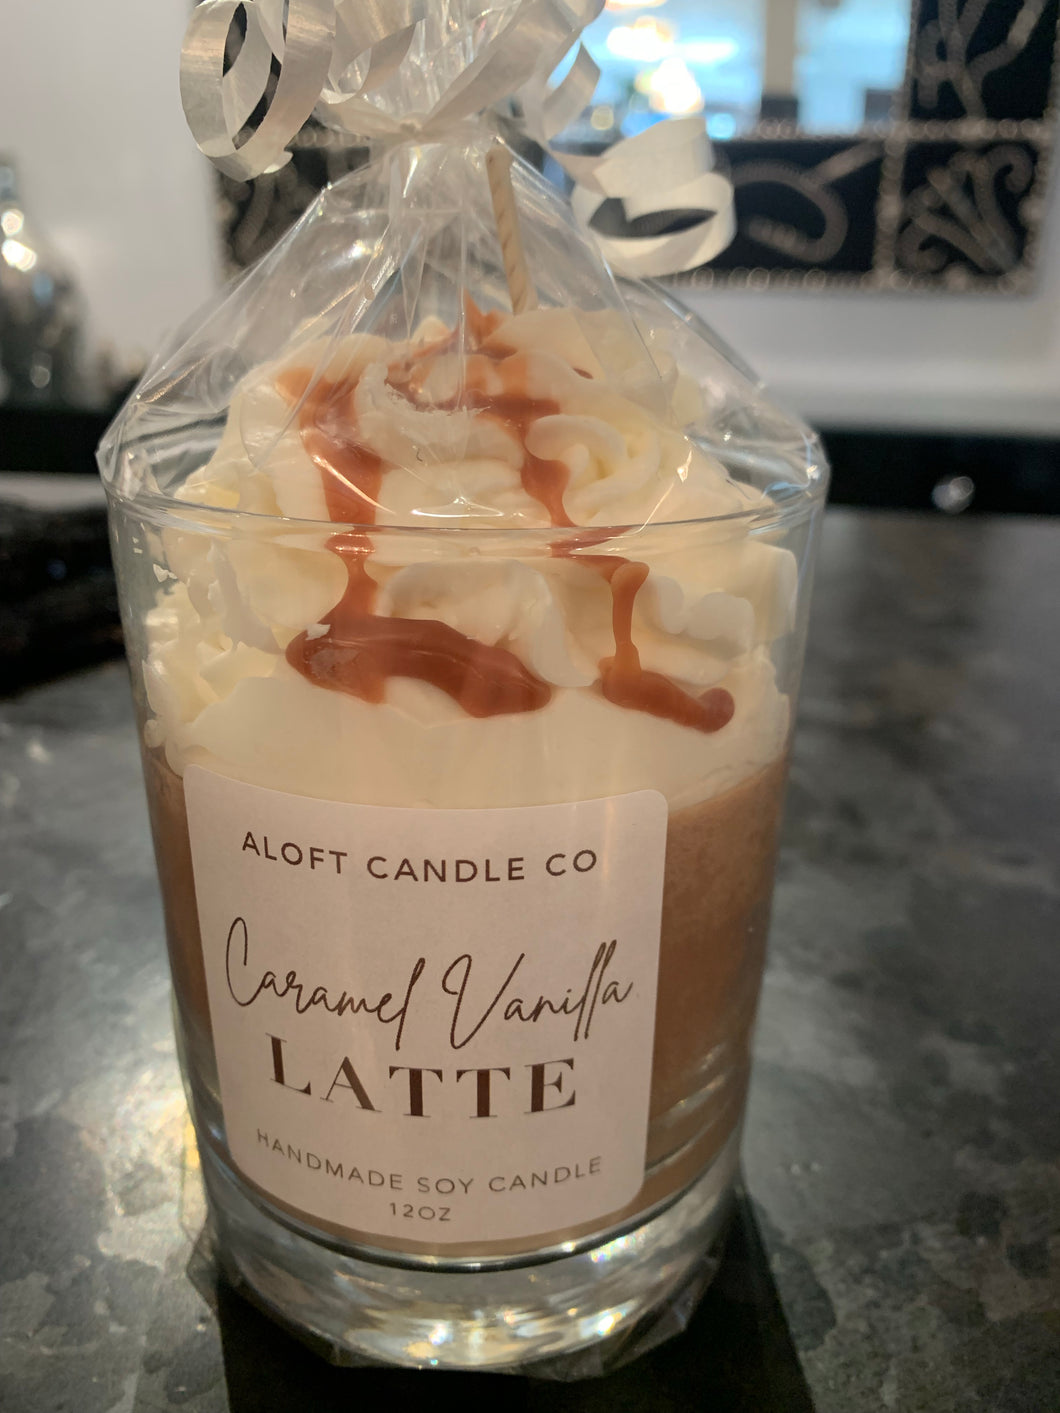 Caramel vanilla candle